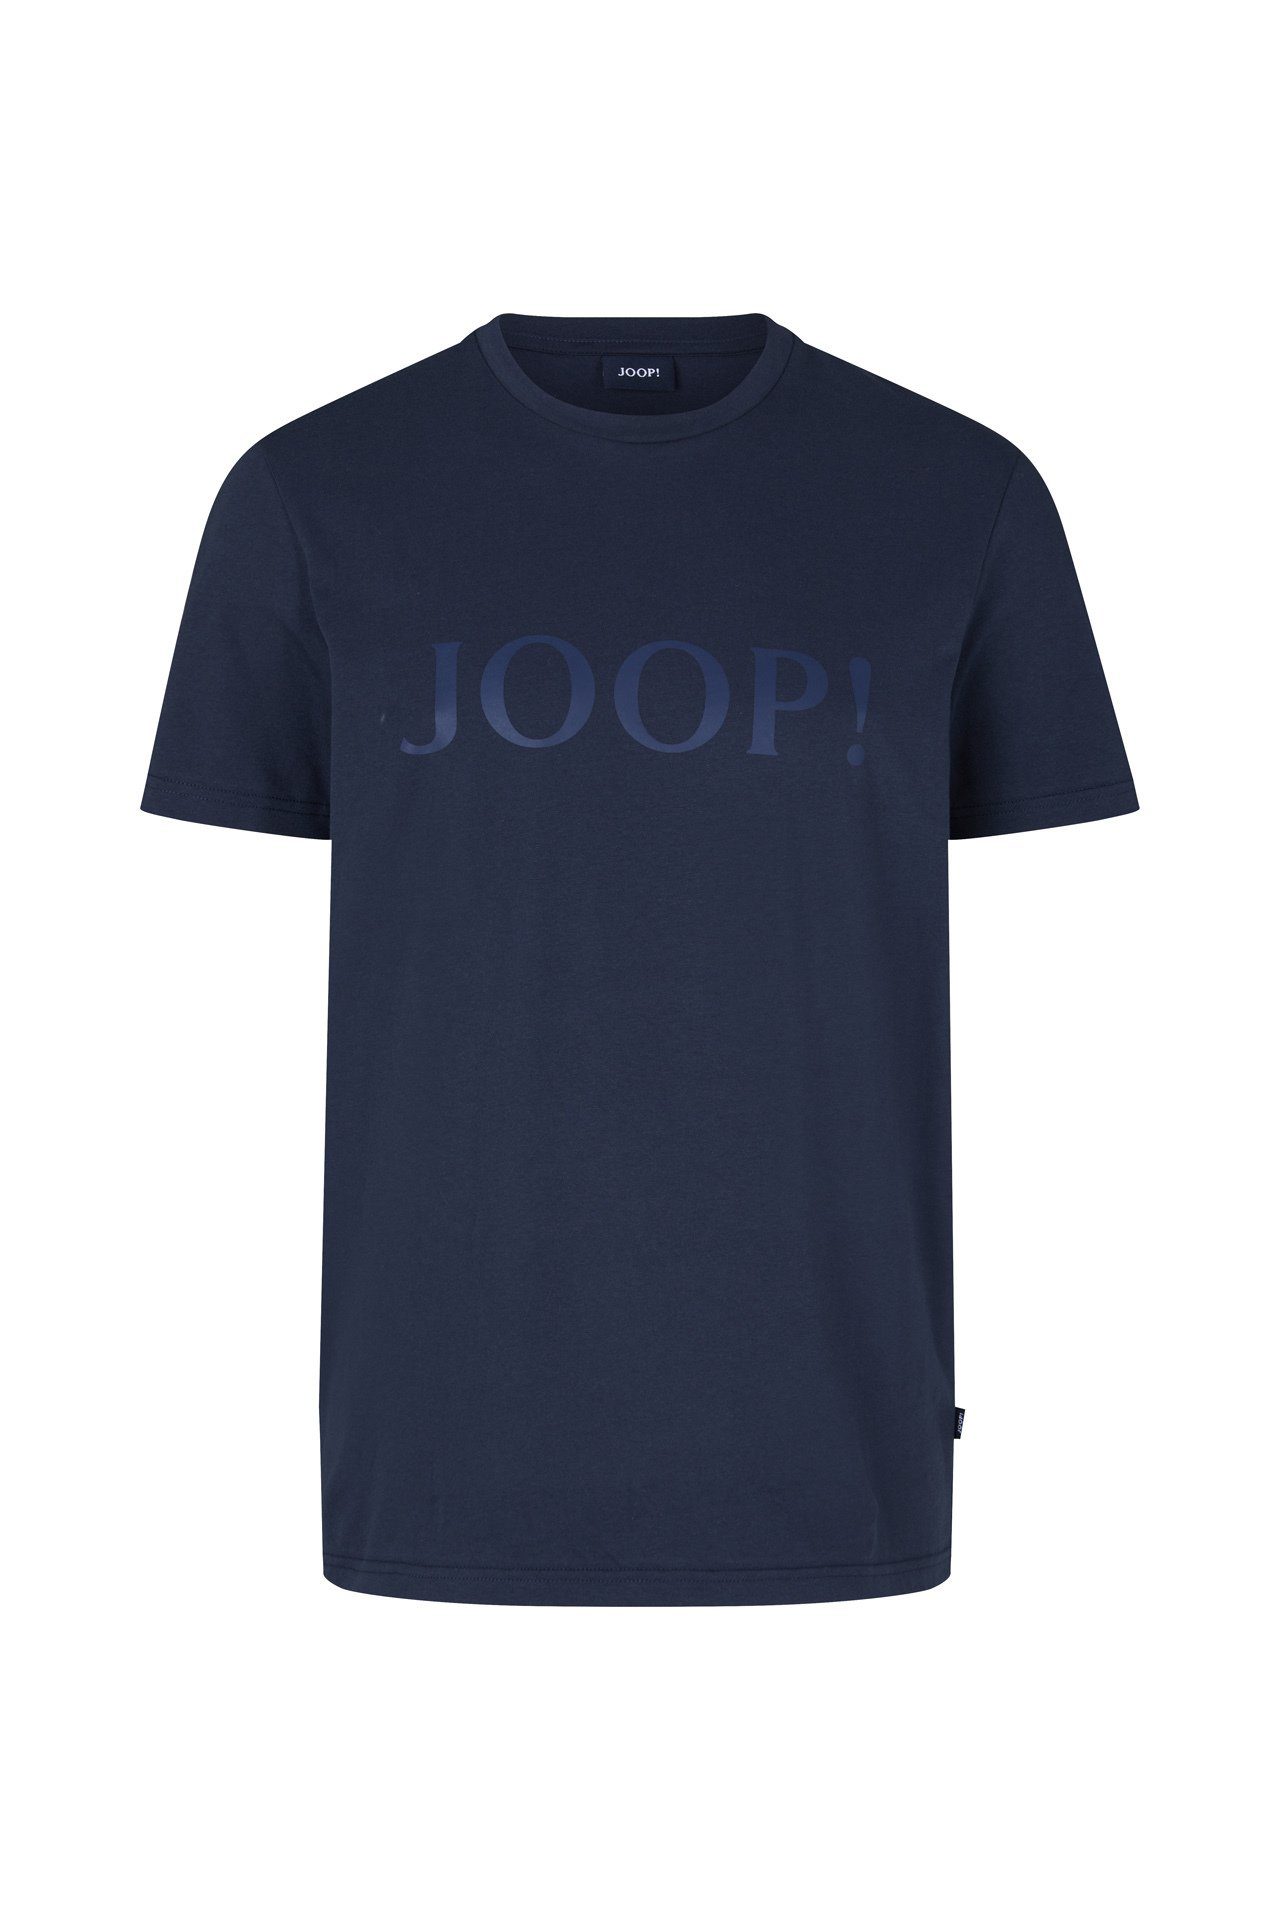 Joop! T-Shirt Herren T-Shirt Halbarm - Blau Rundhals, JJ-06Alerio